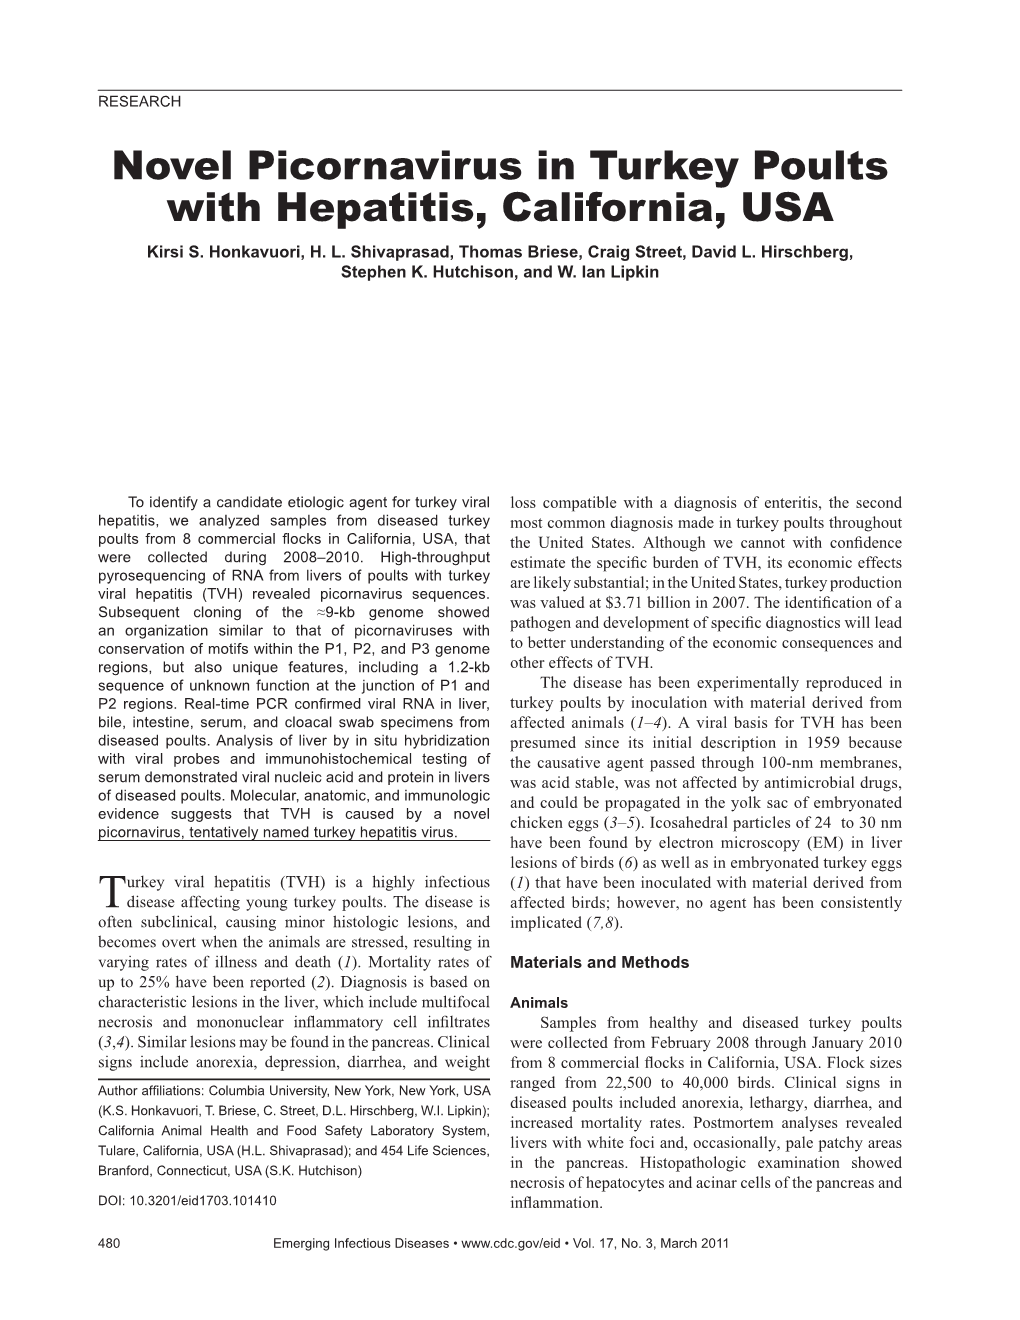 Novel Picornavirus in Turkey Poults with Hepatitis, California, USA Kirsi S